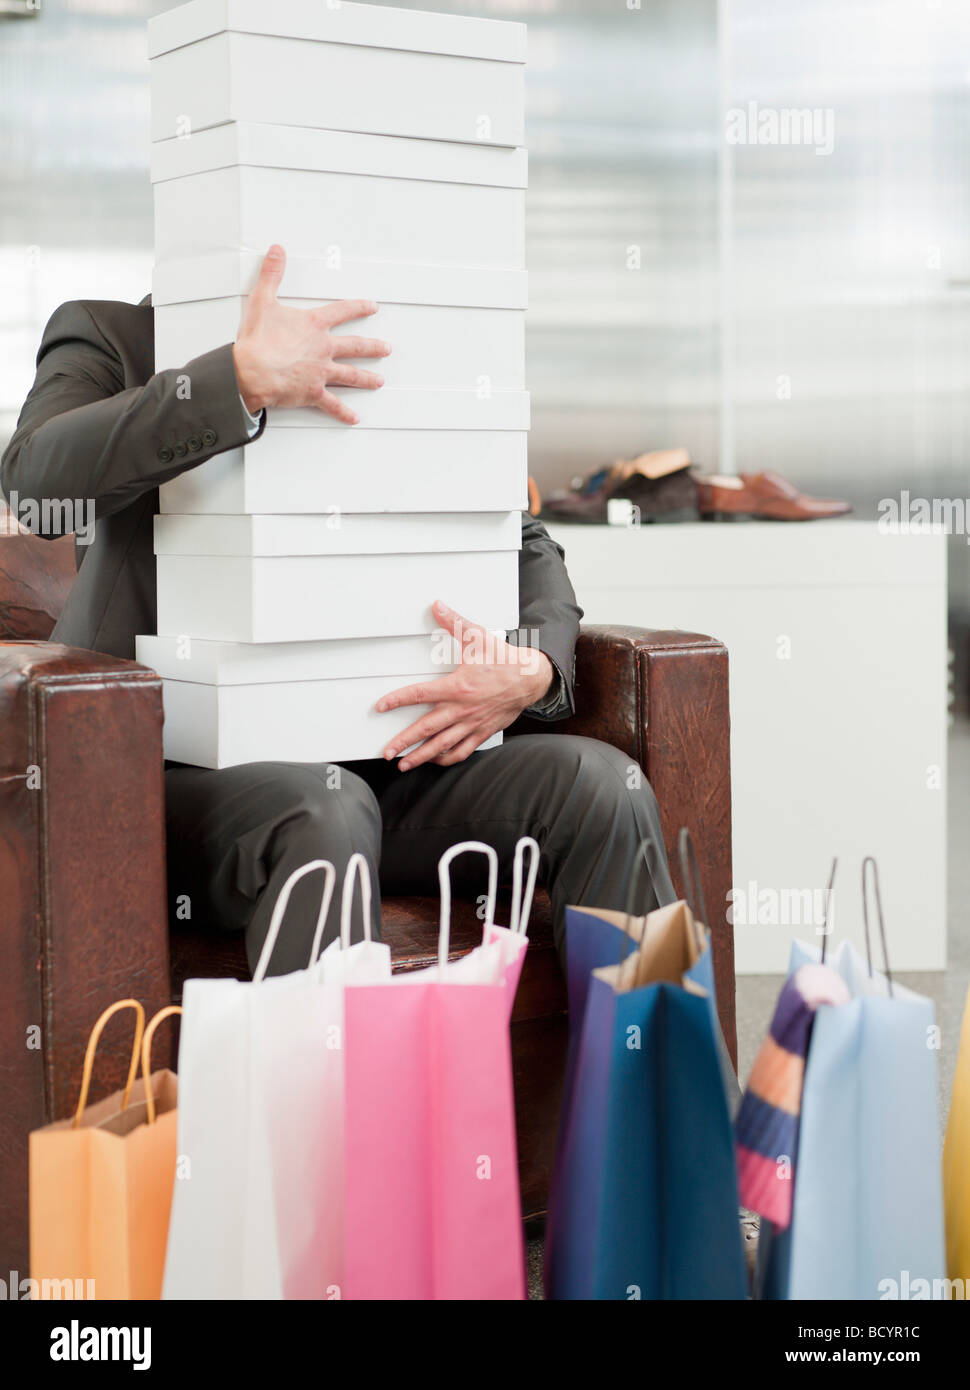 man shopping holding pile of cartons Stock Photo